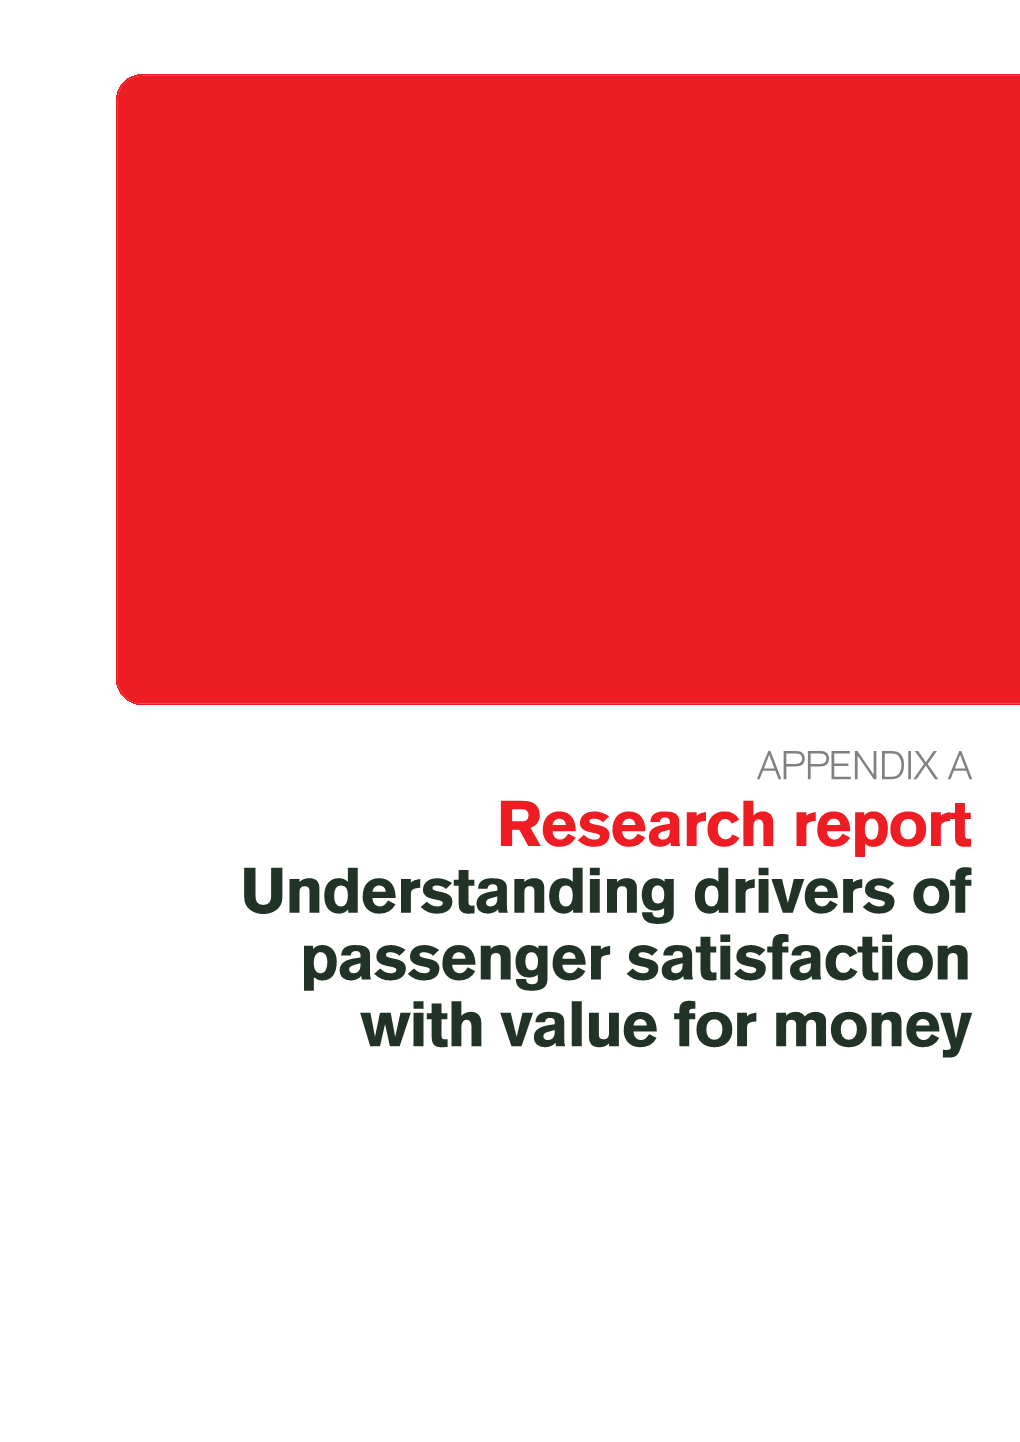 Research Report Understanding Drivers of Passenger Satisfaction with Value for Money Passenger Focus